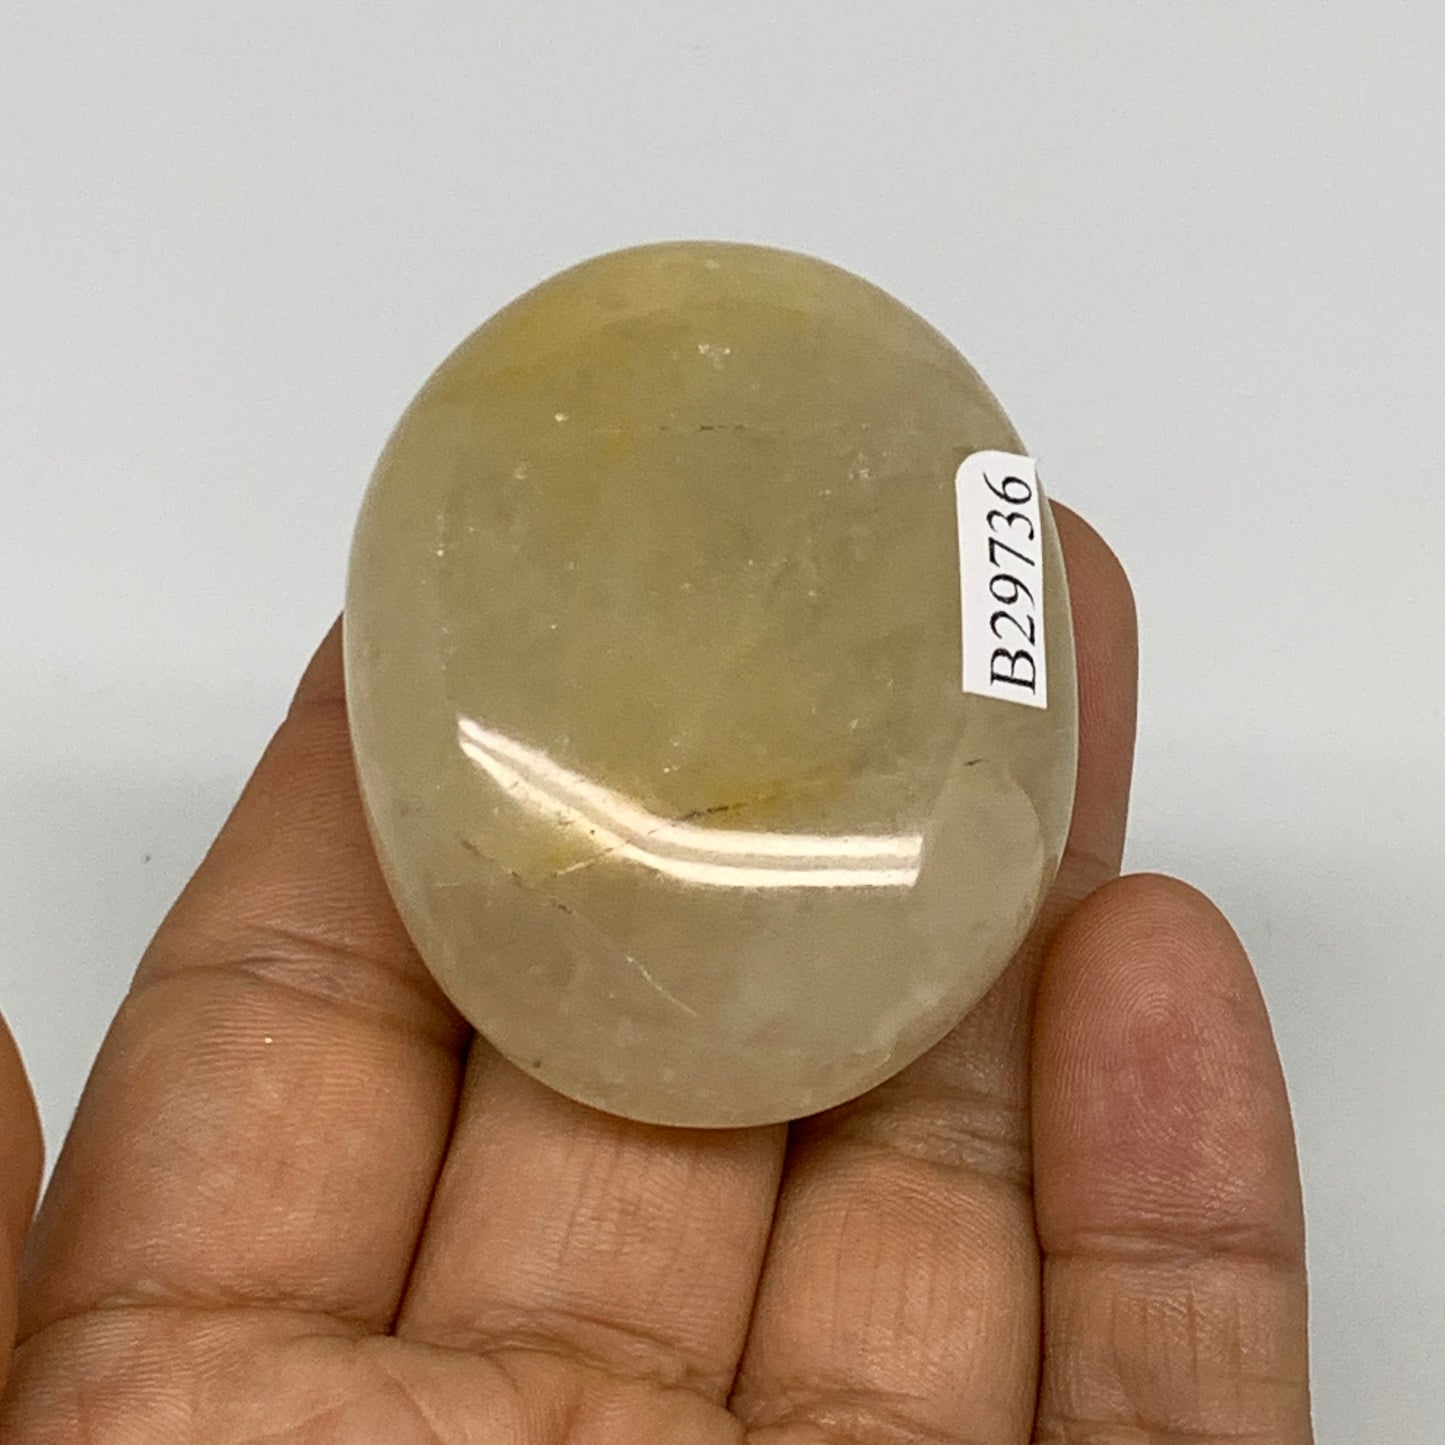 71.4g,2.1"x1.6"x0.8", Yellow Aventurine Palm-Stone Crystal Stone @India,B29736